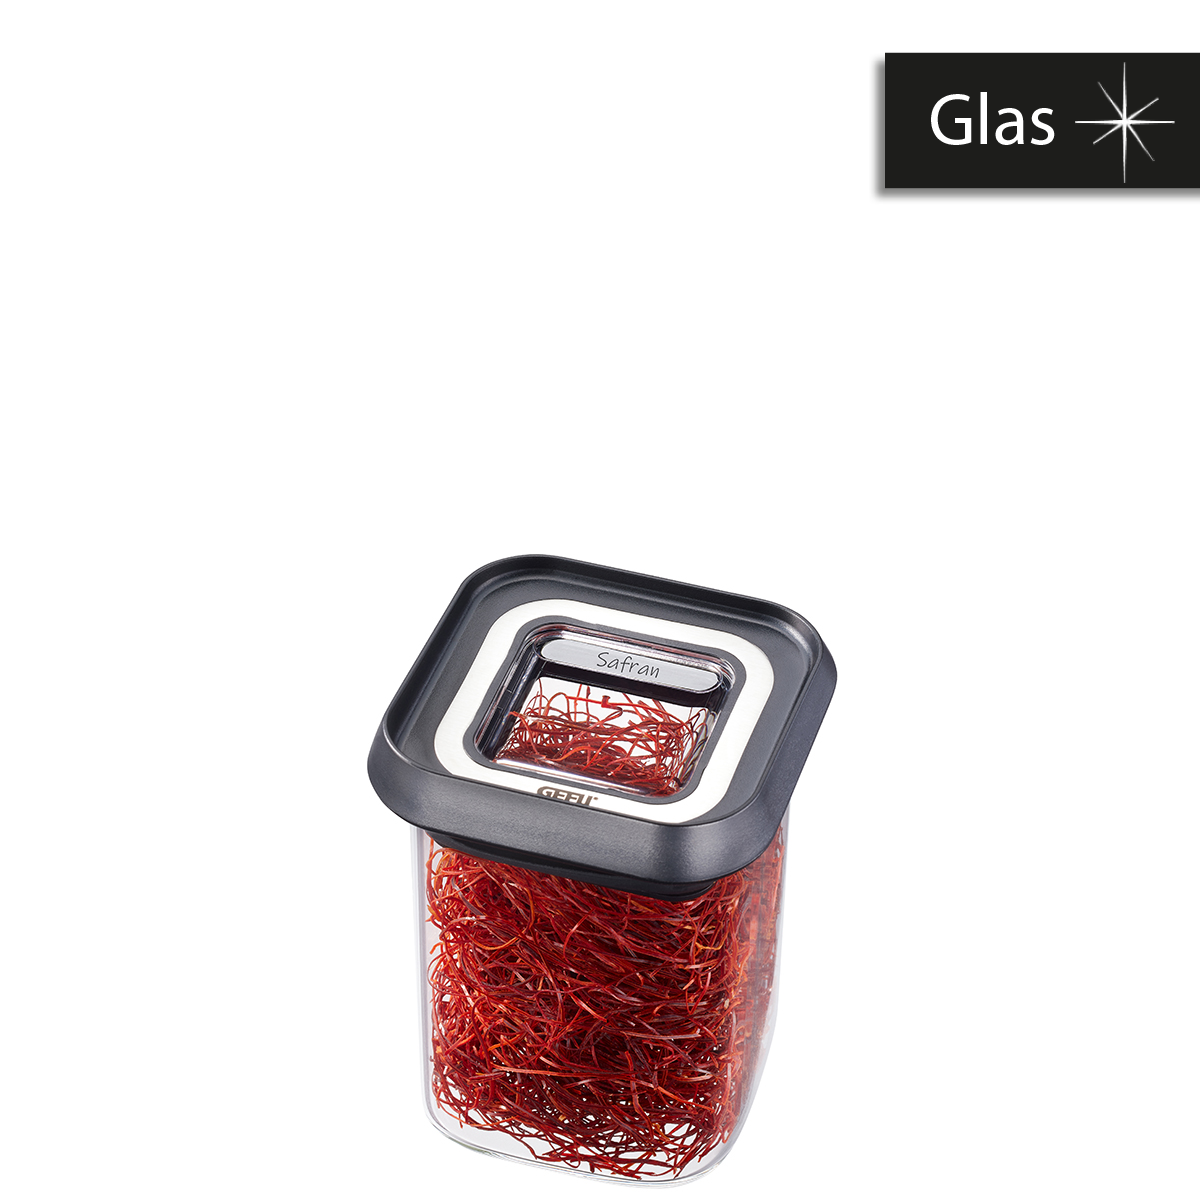 Küchenhelfer Gefu aus Glas Kunststoff in Transparent Schwarz GEFU Vorratsdose mini, 180 ml Borosilikatglas